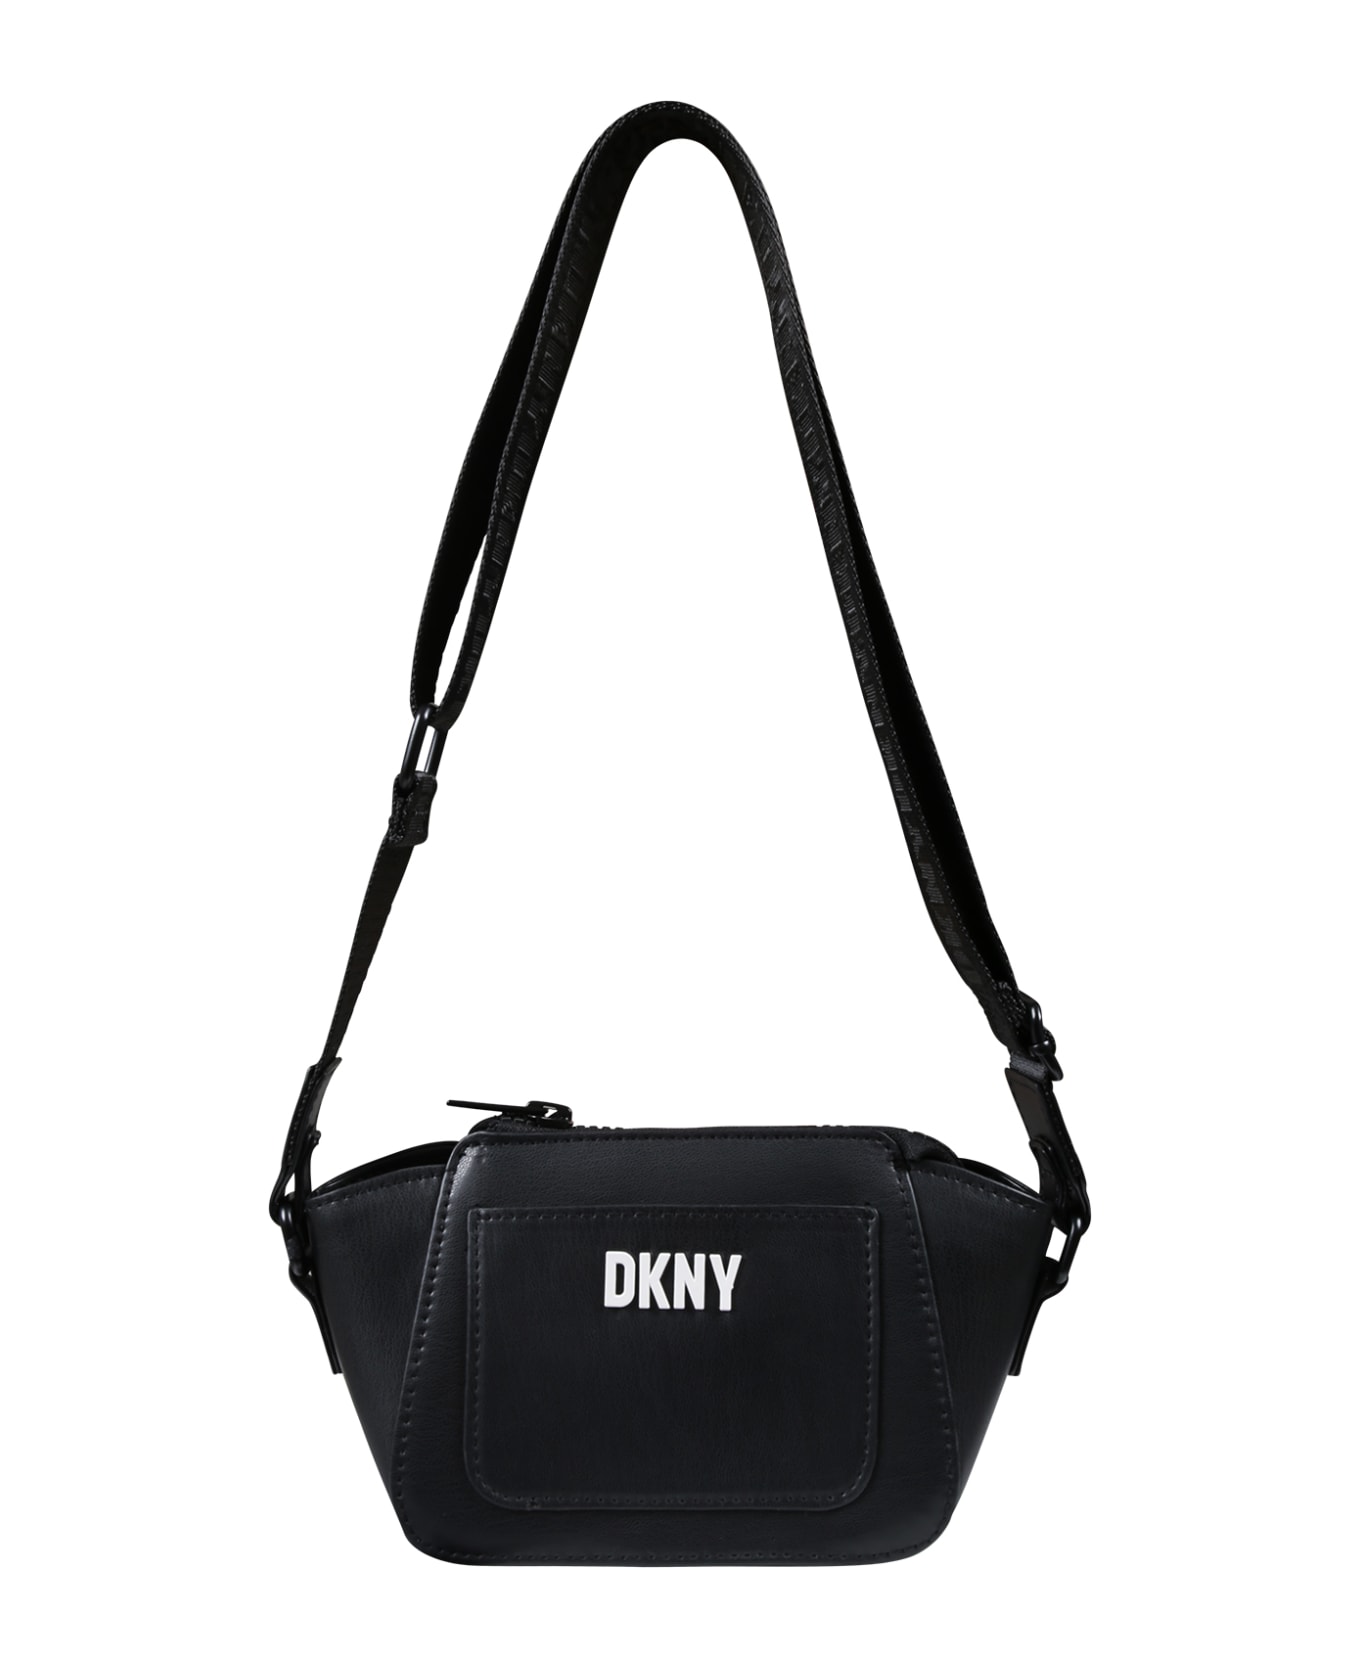 DKNY Black Bag For Girl With Logo - B Nero